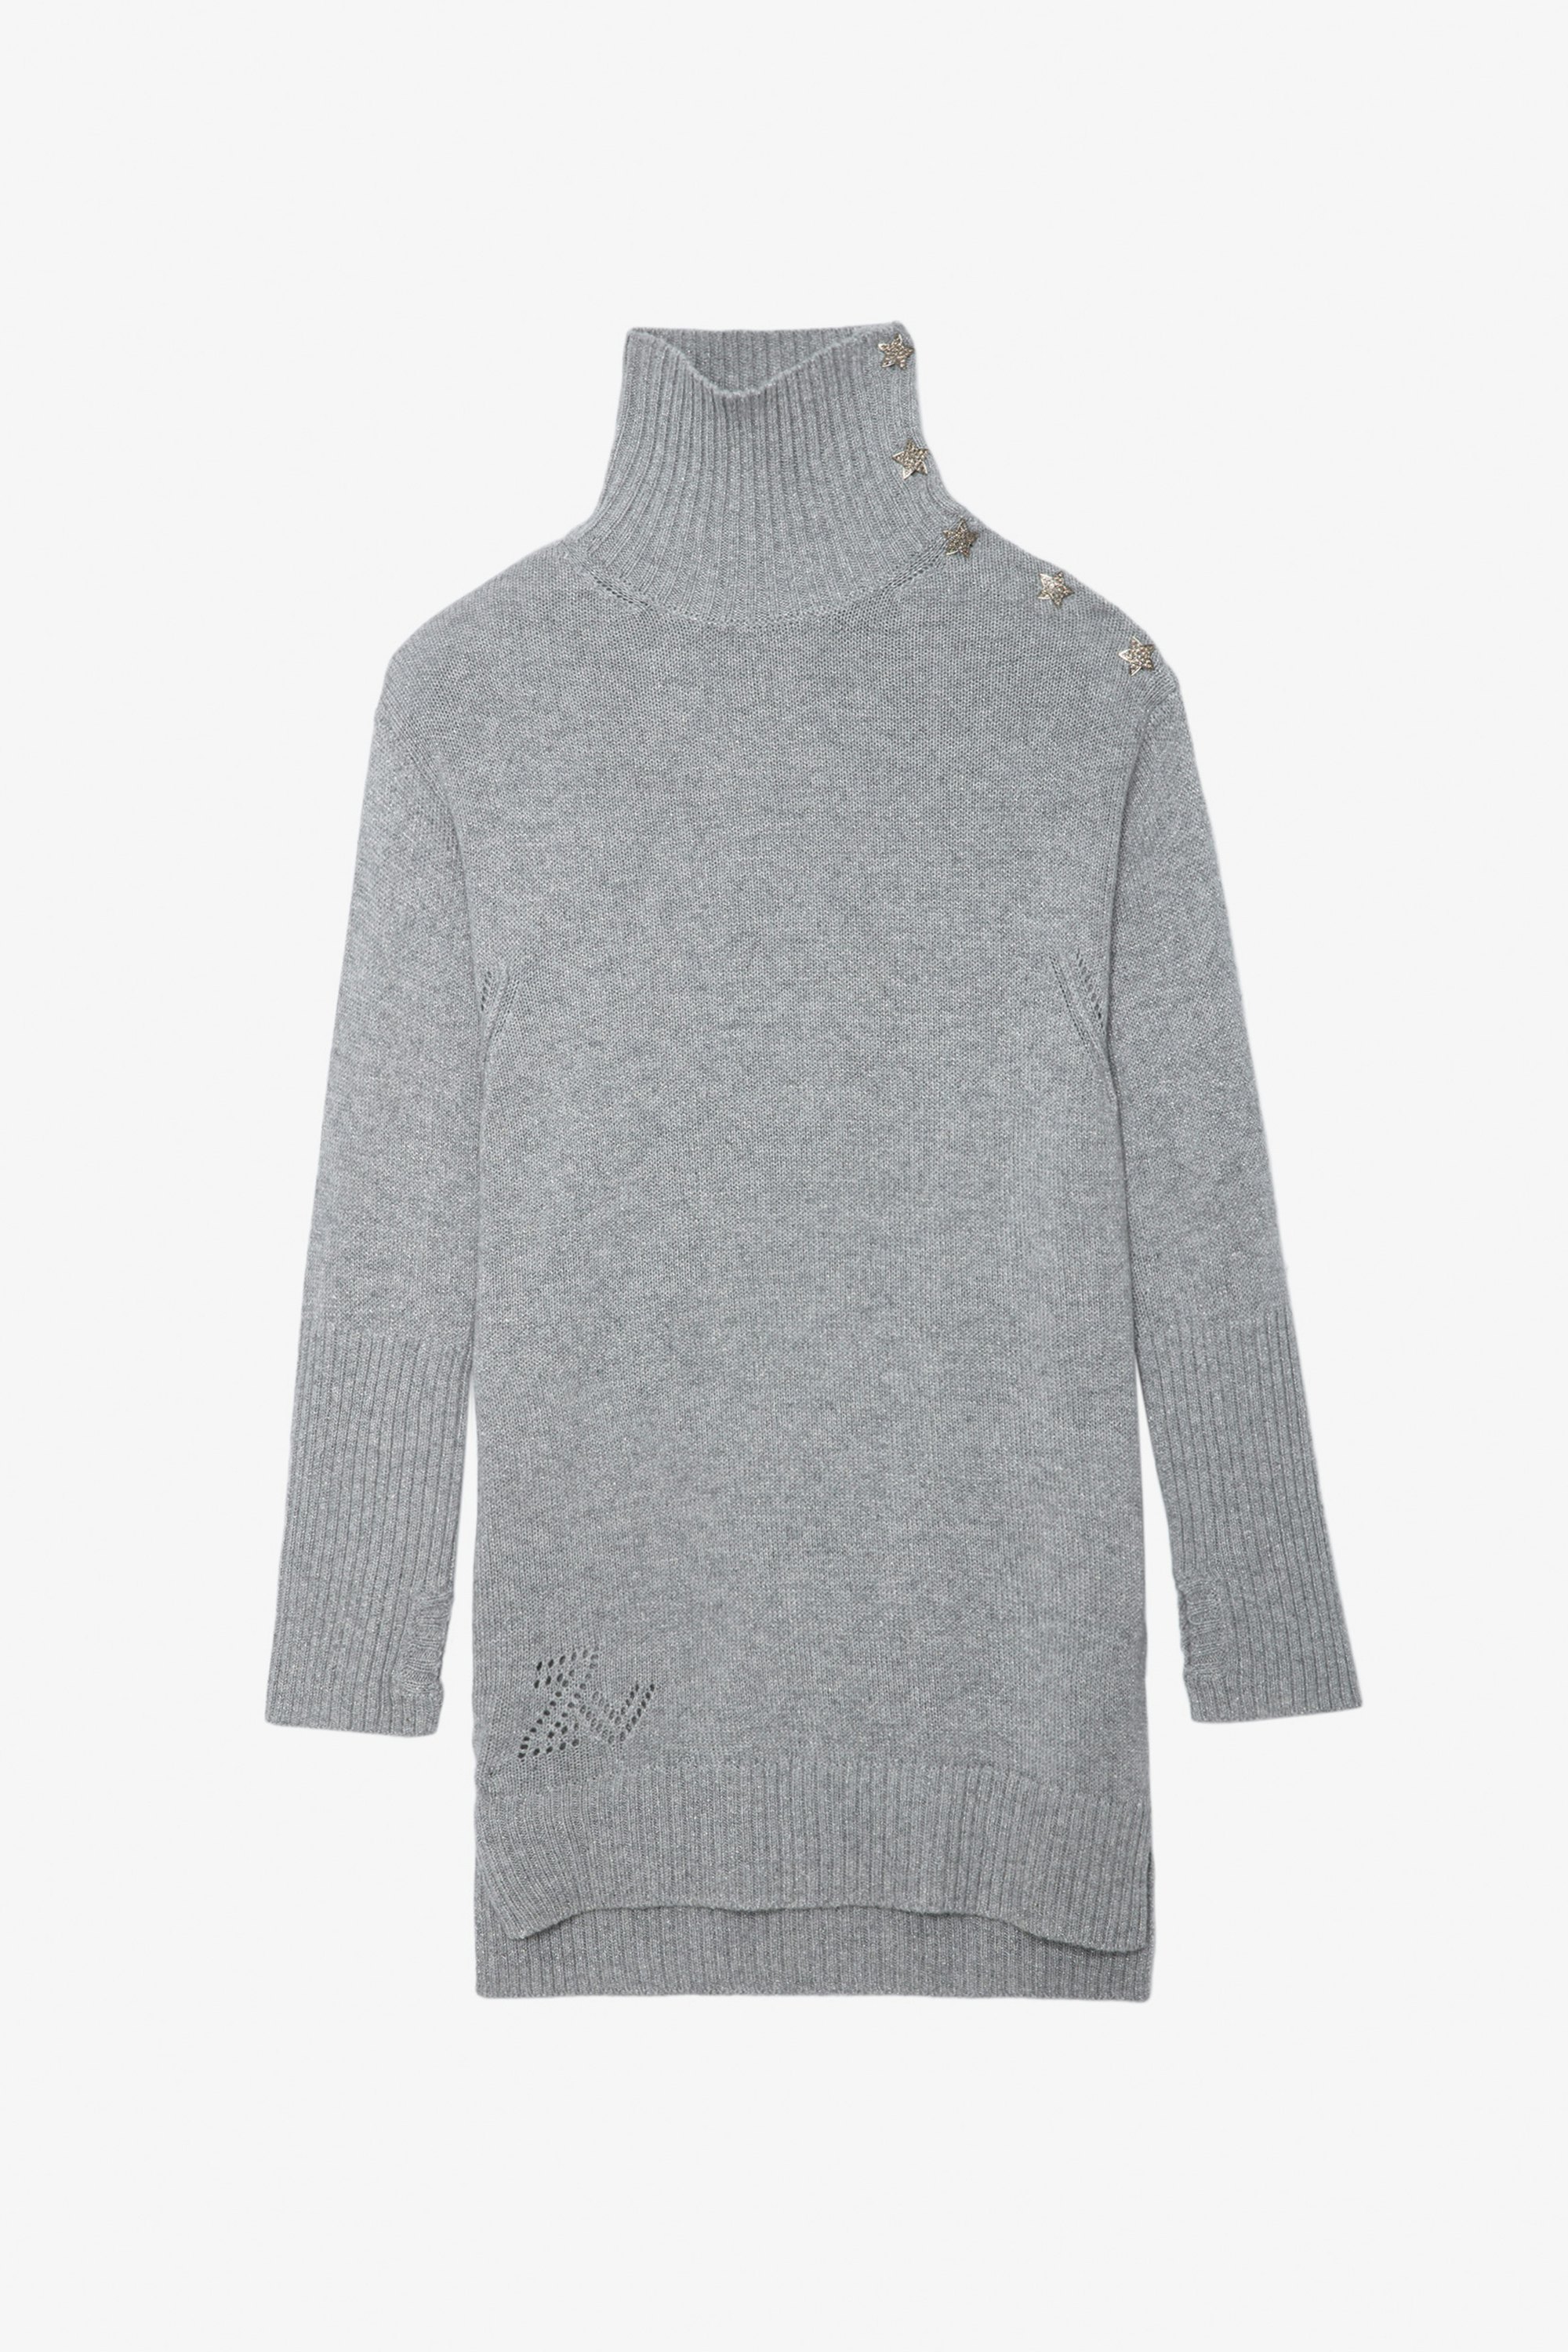 Almira Jewellery Dress - Women’s light grey knit midi turtleneck dress with star buttons on the shoulder.